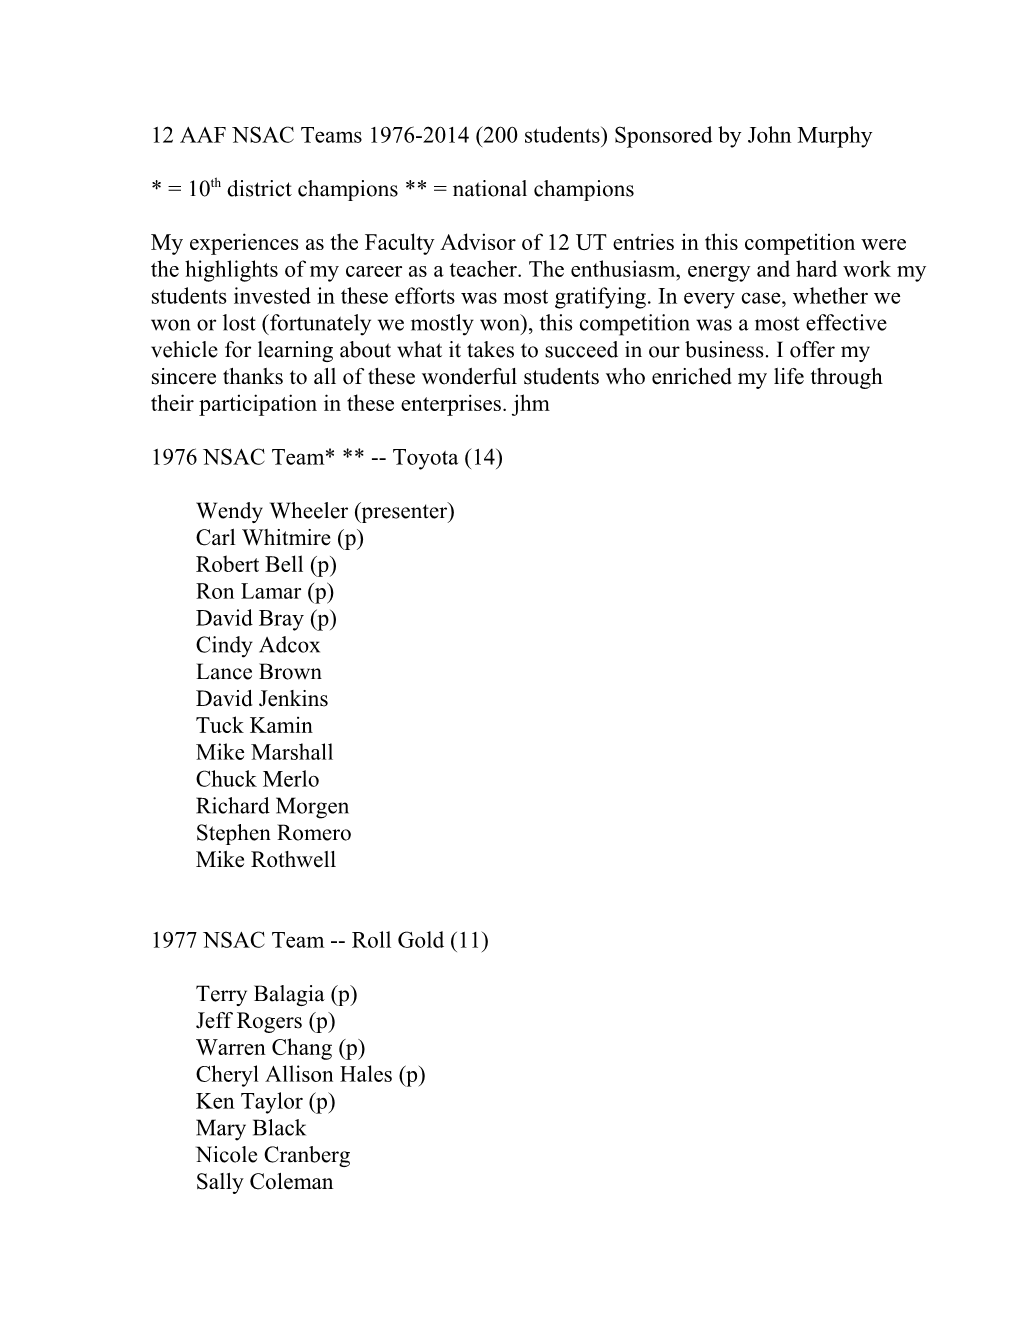 12 AAF NSAC Teams 1976-2014 (200 Students) Sponsored by John Murphy